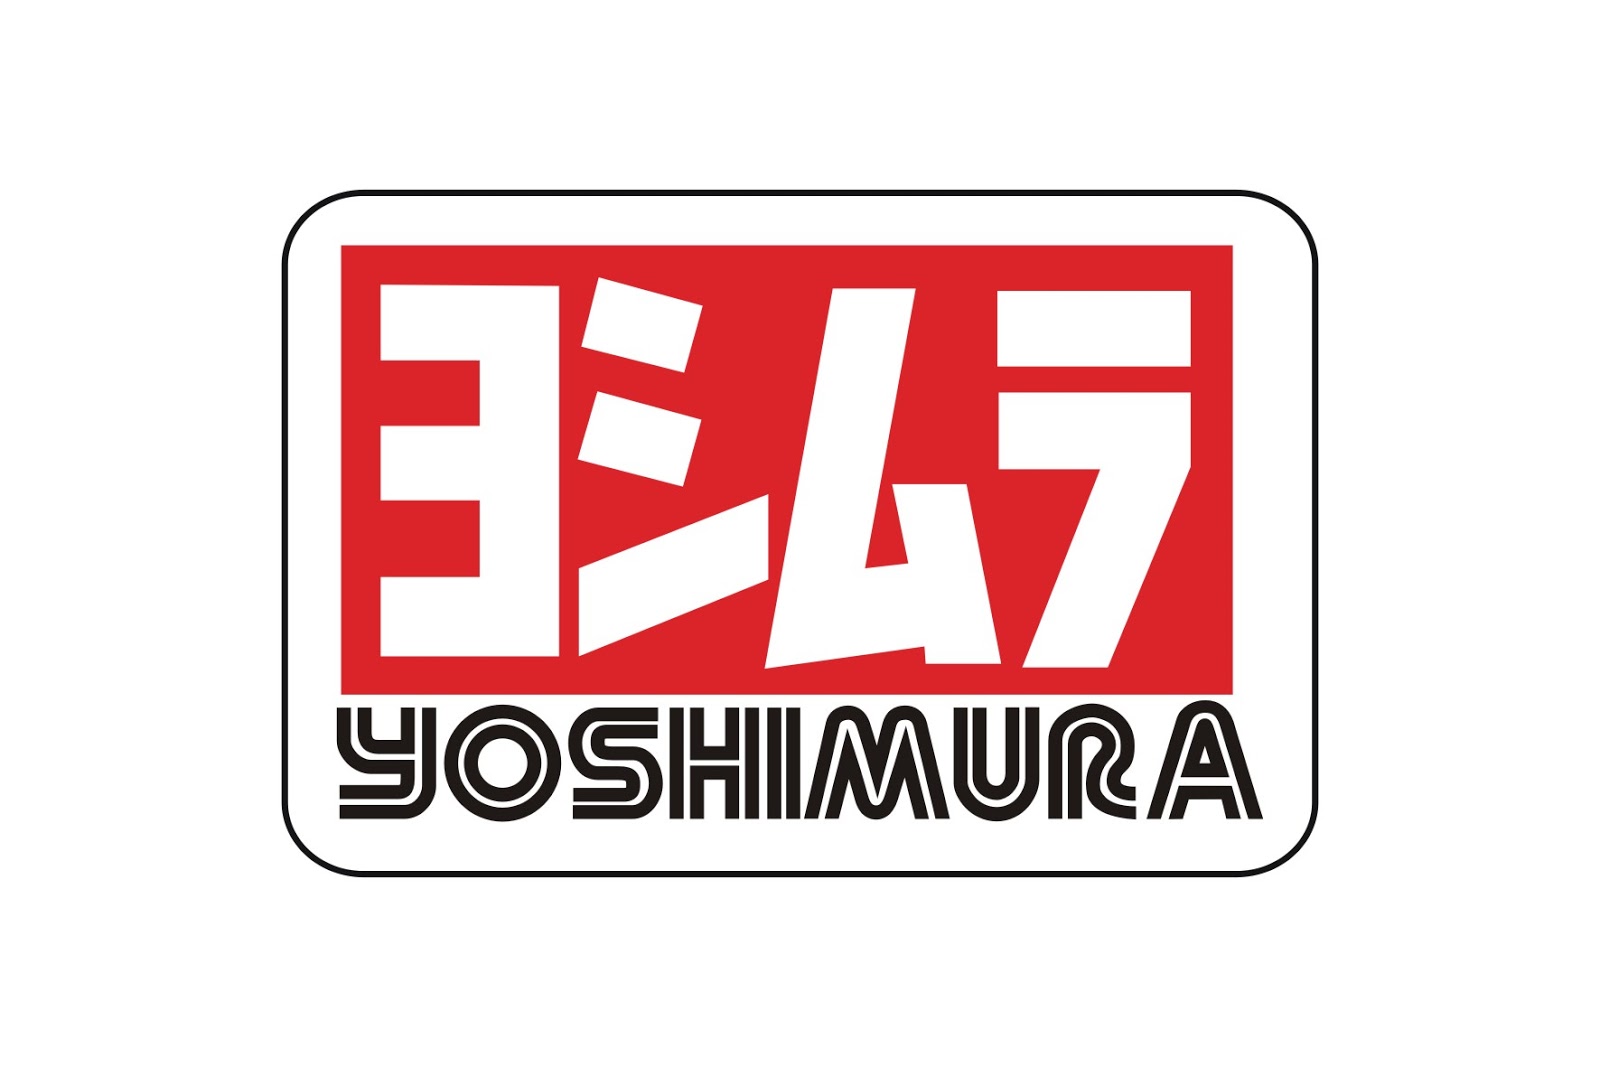 Yoshimura Logo Wallpaper